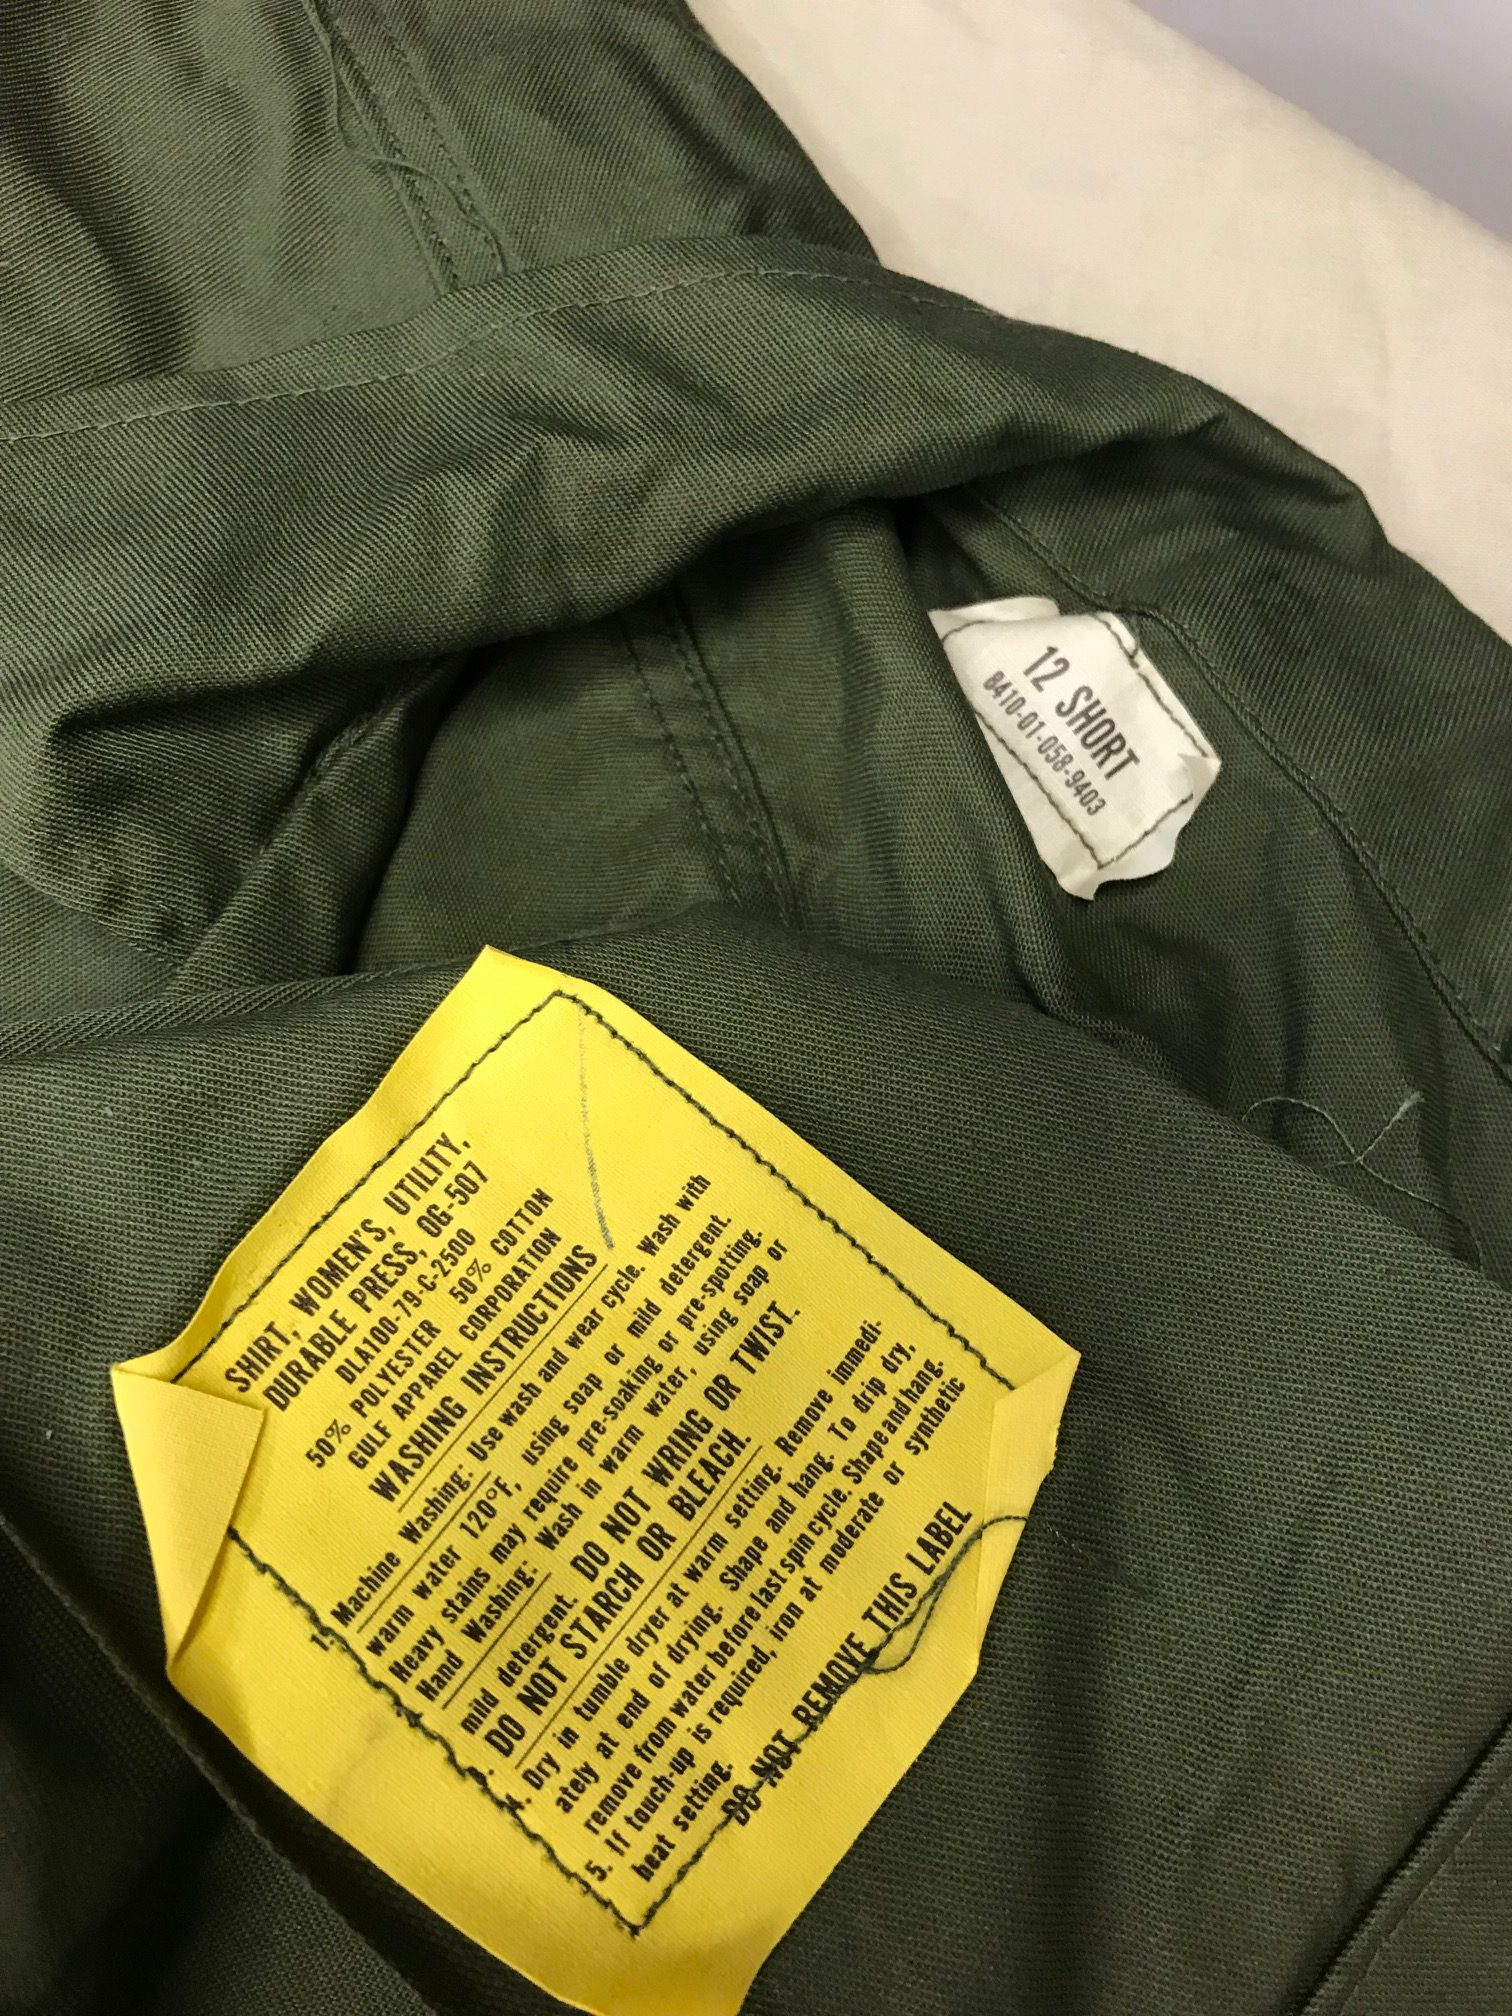 Women's fatigue shirt top pocket p/c 12s - Omahas Army Navy Surplus